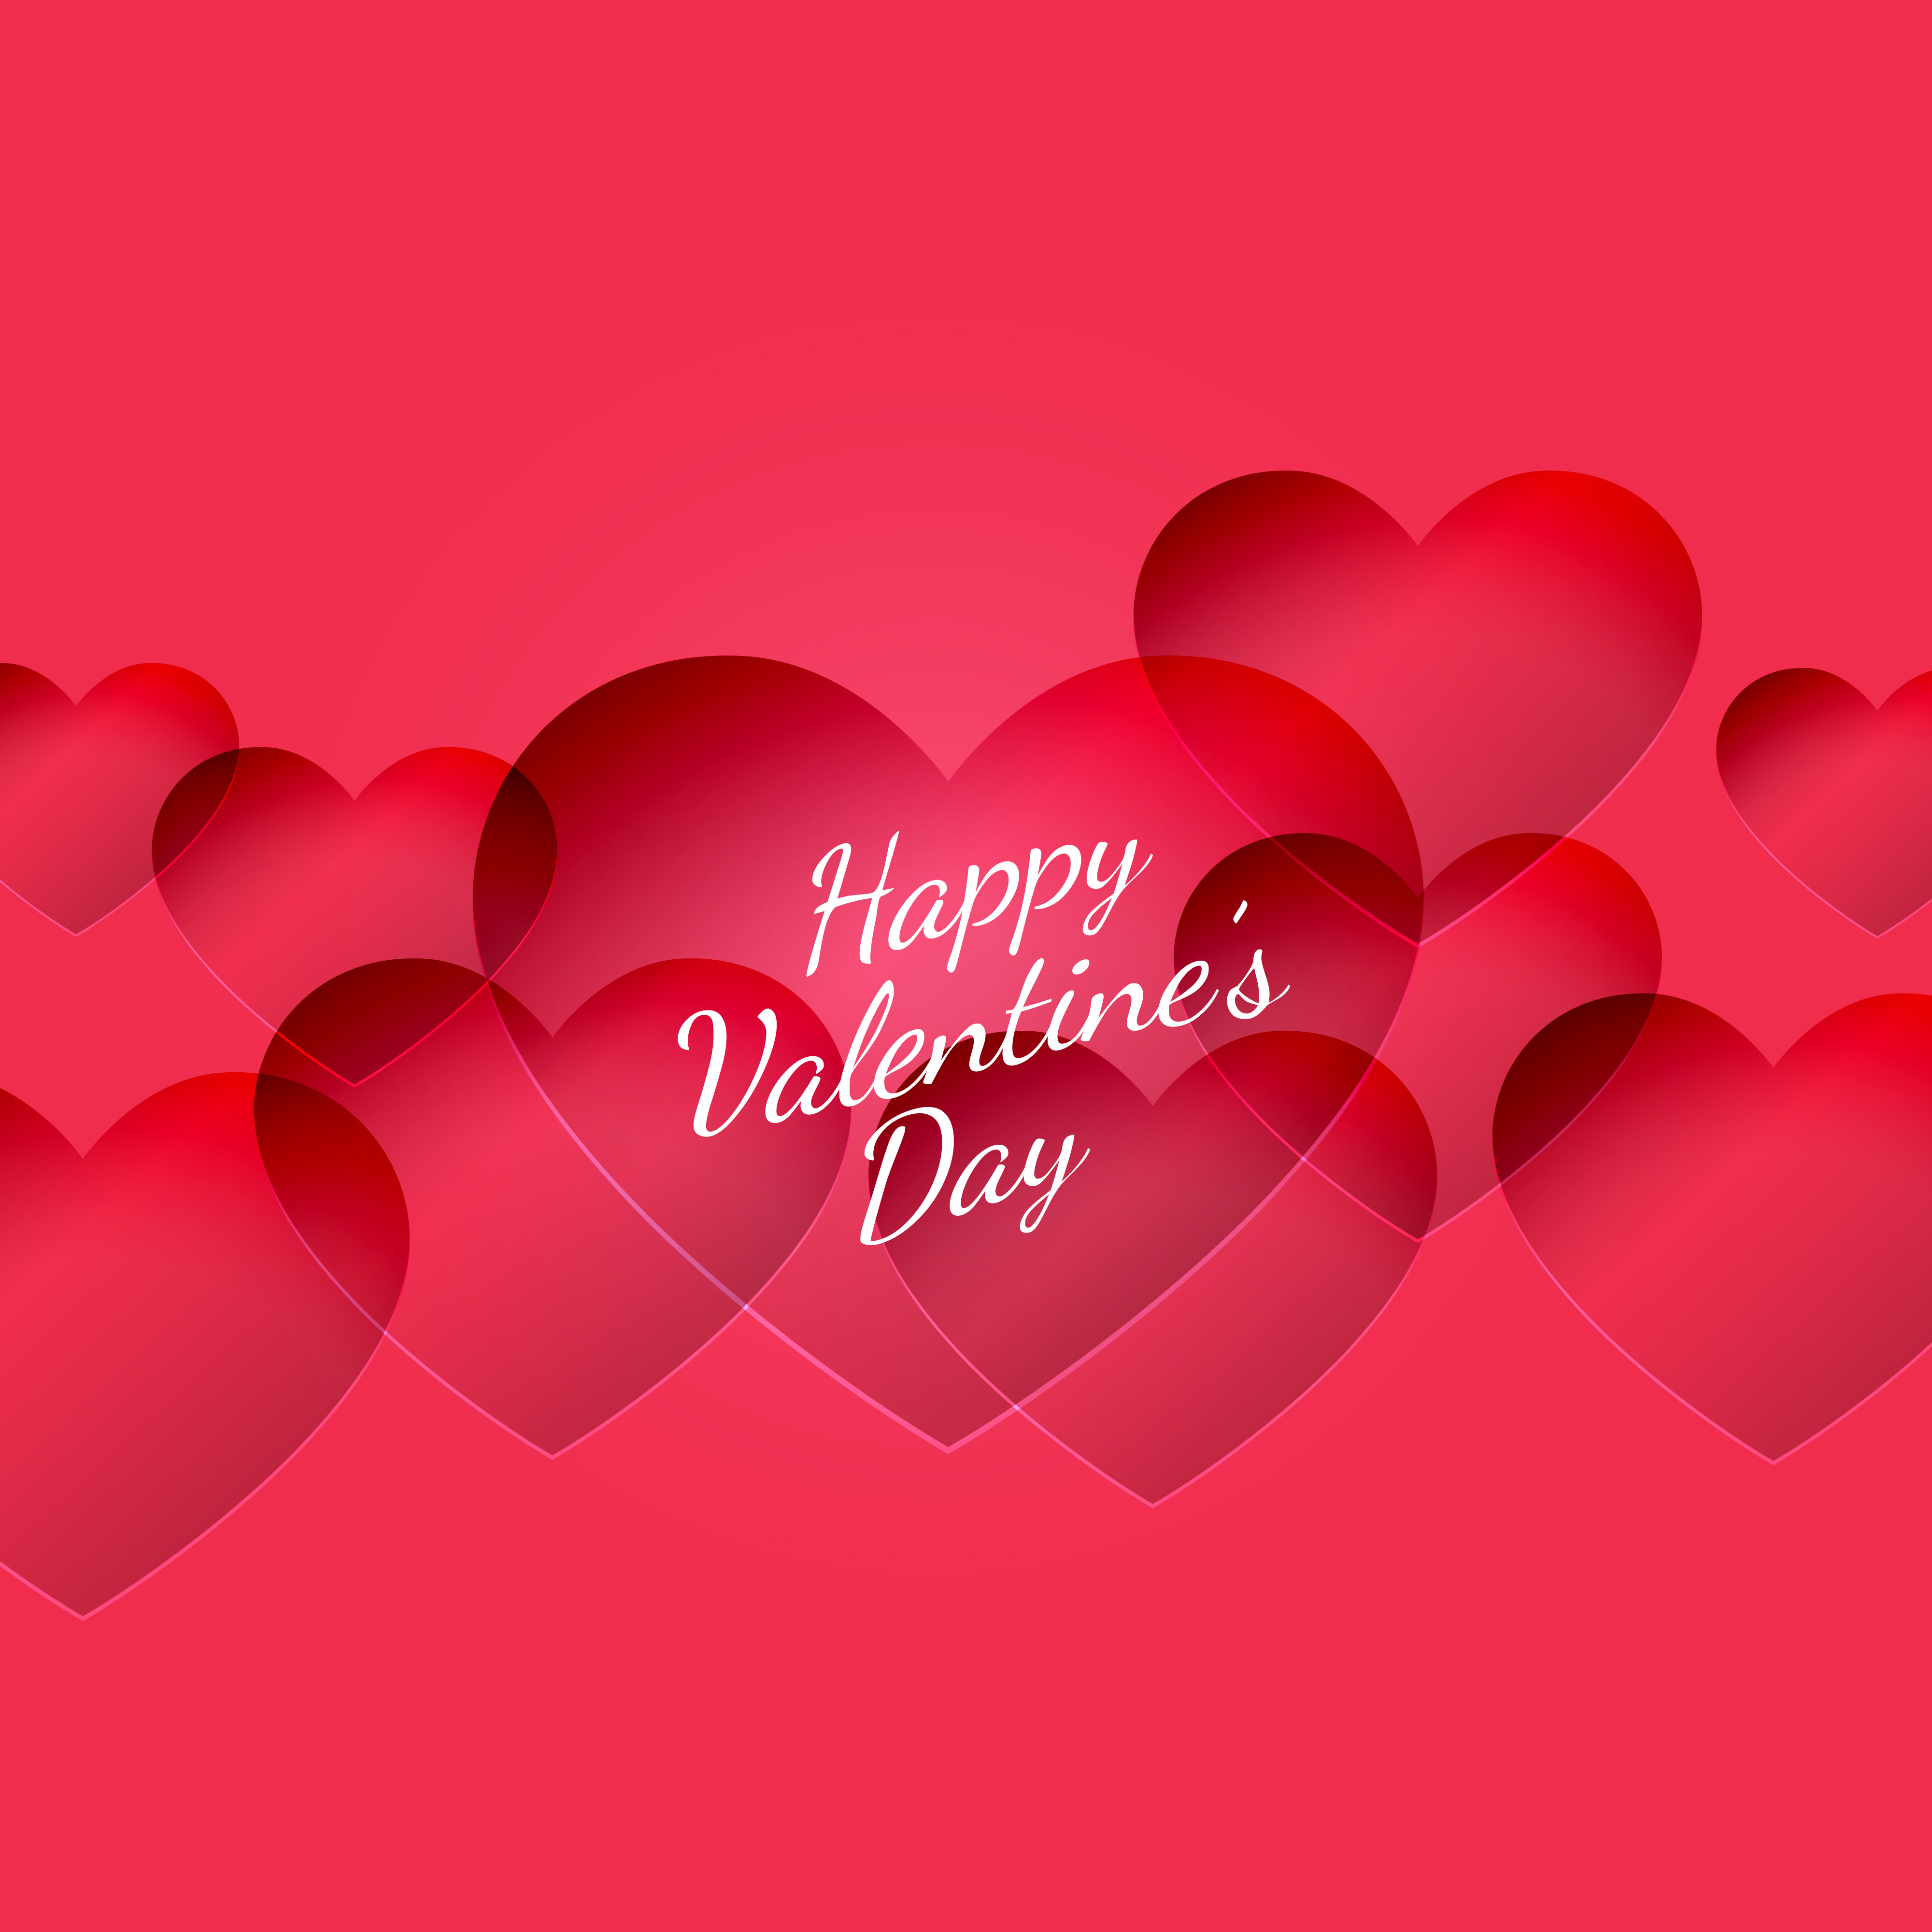 Download love hearts in pink background vector design illustration ...